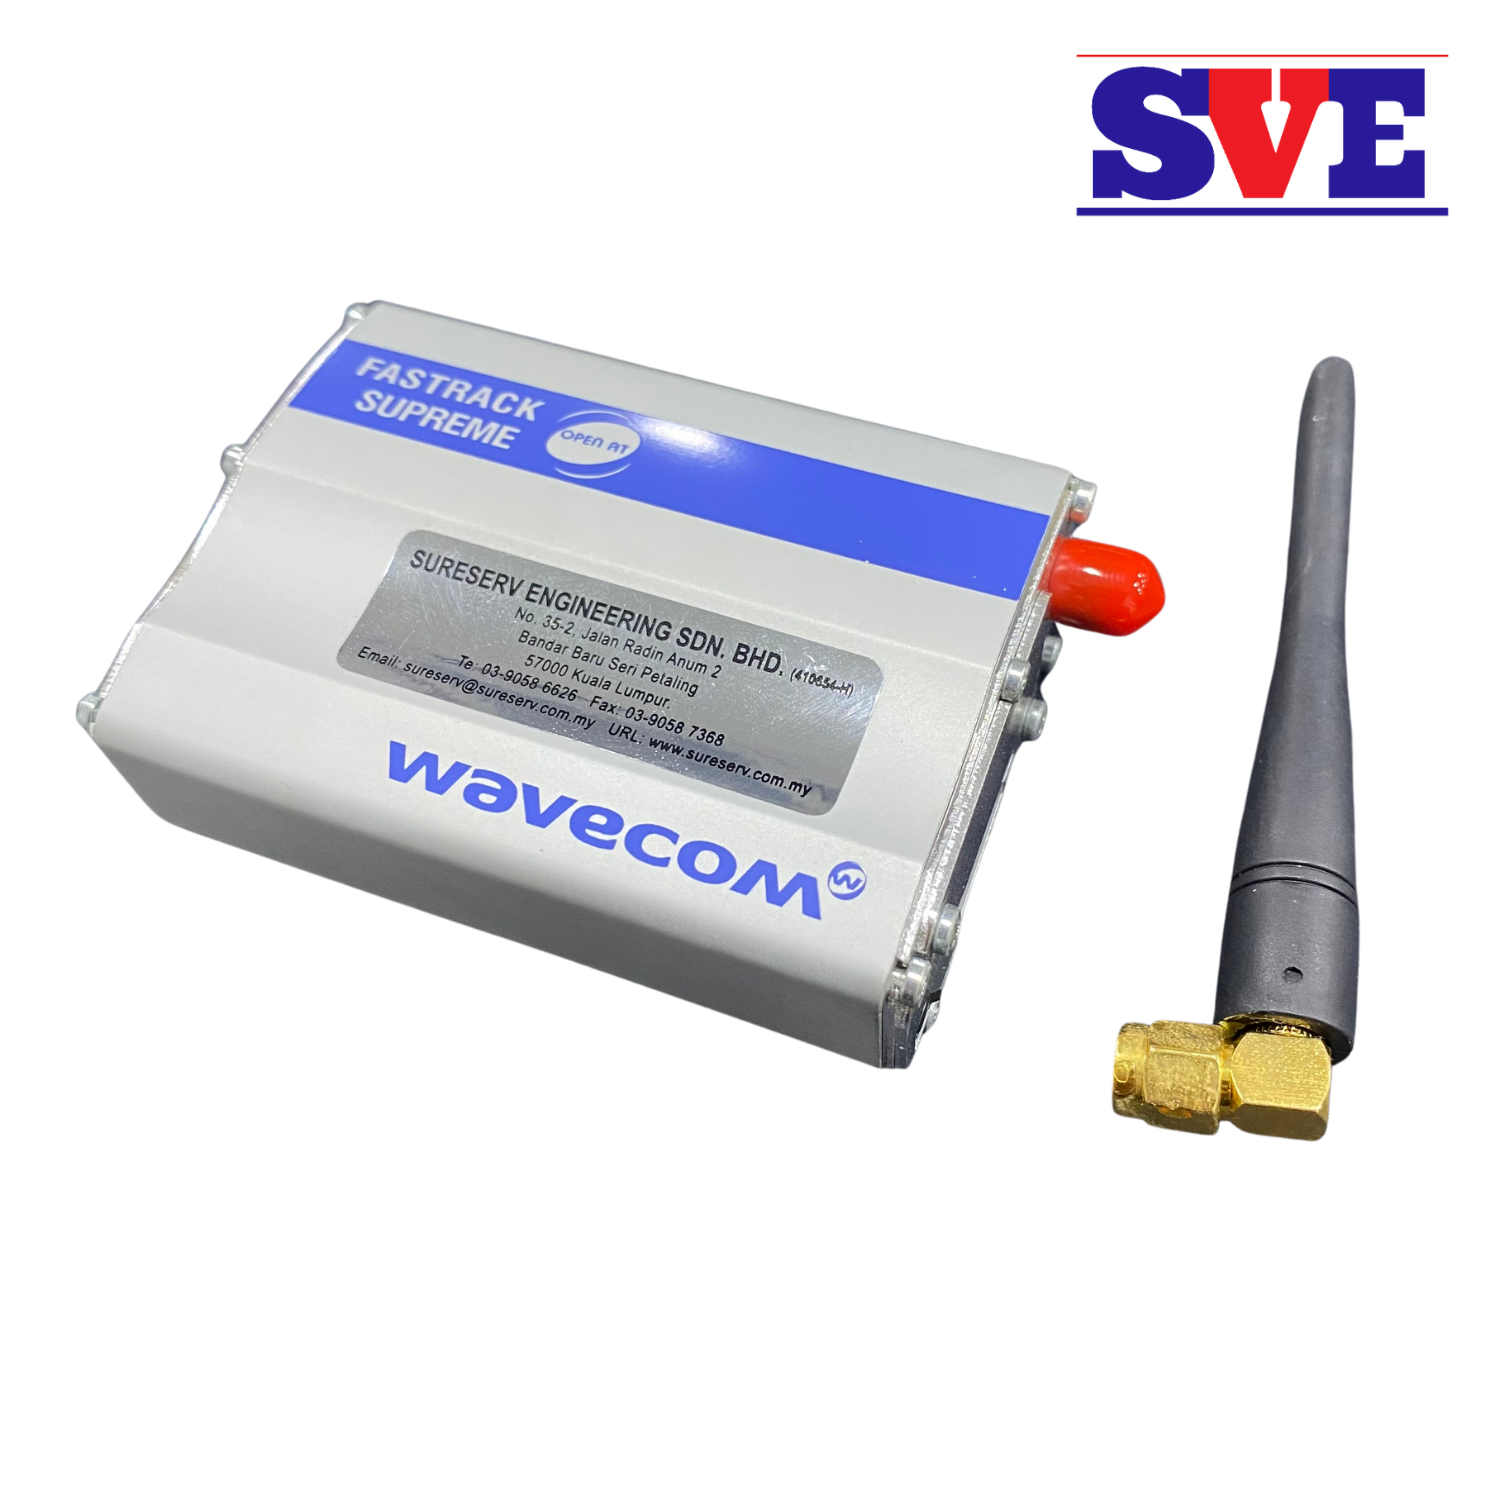 Presenter karakterisere dele Wavecom Fastrack Supreme 10 GSM GPRS MODEM Type S10-E – SURESERV  Engineering Sdn Bhd